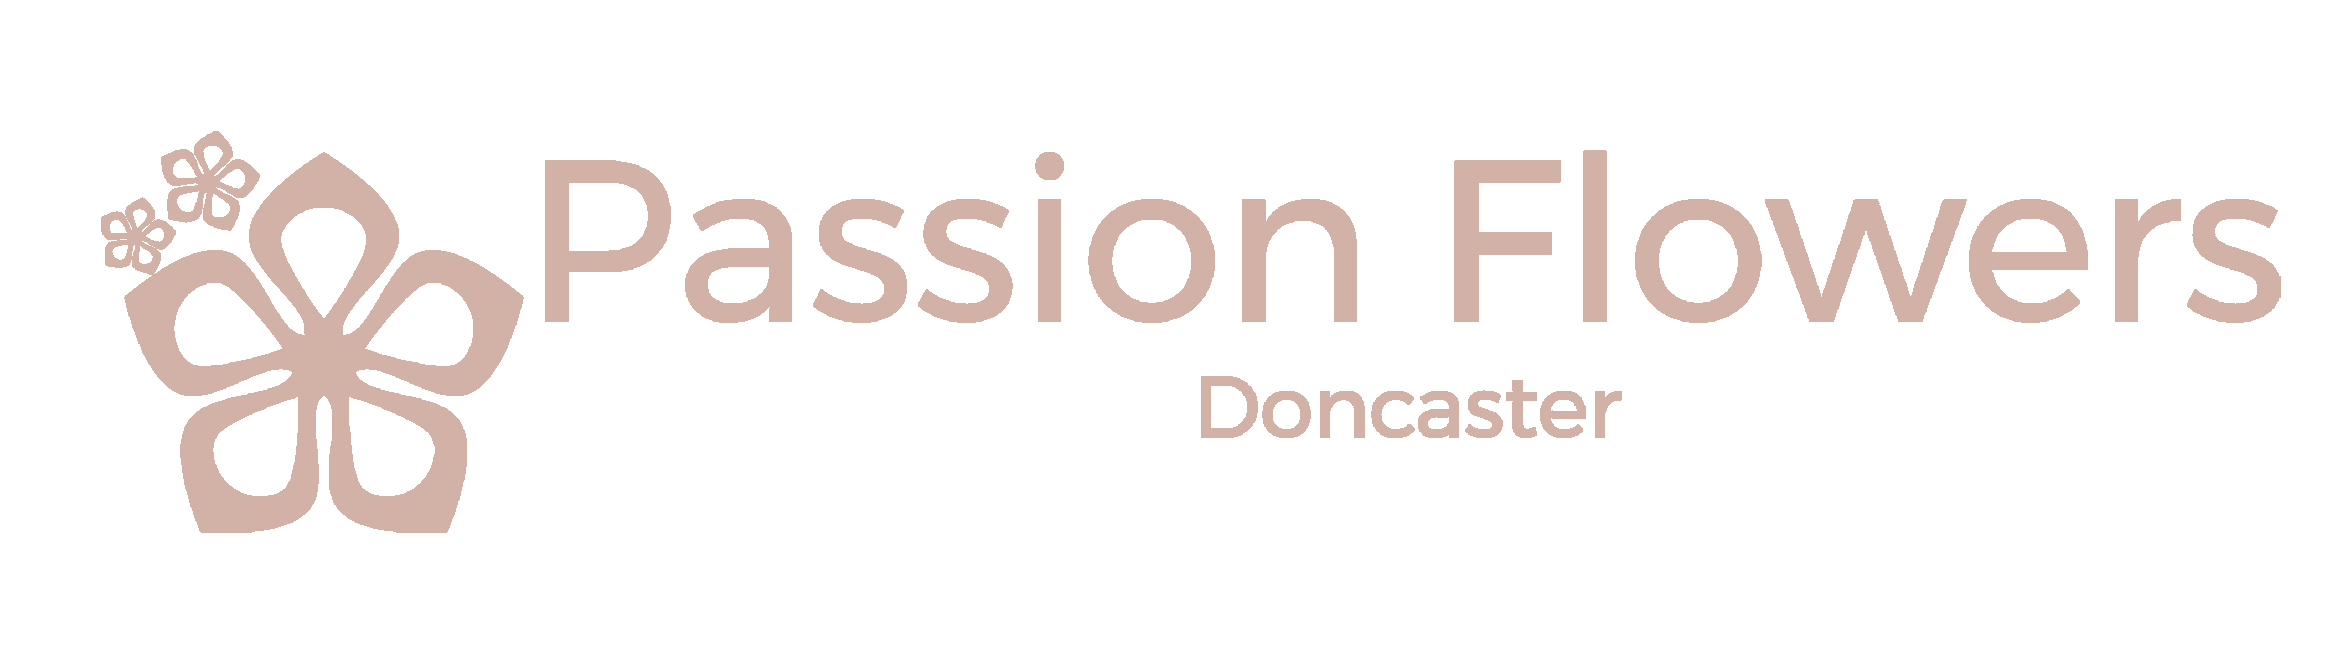 Passion Flowers Doncaster